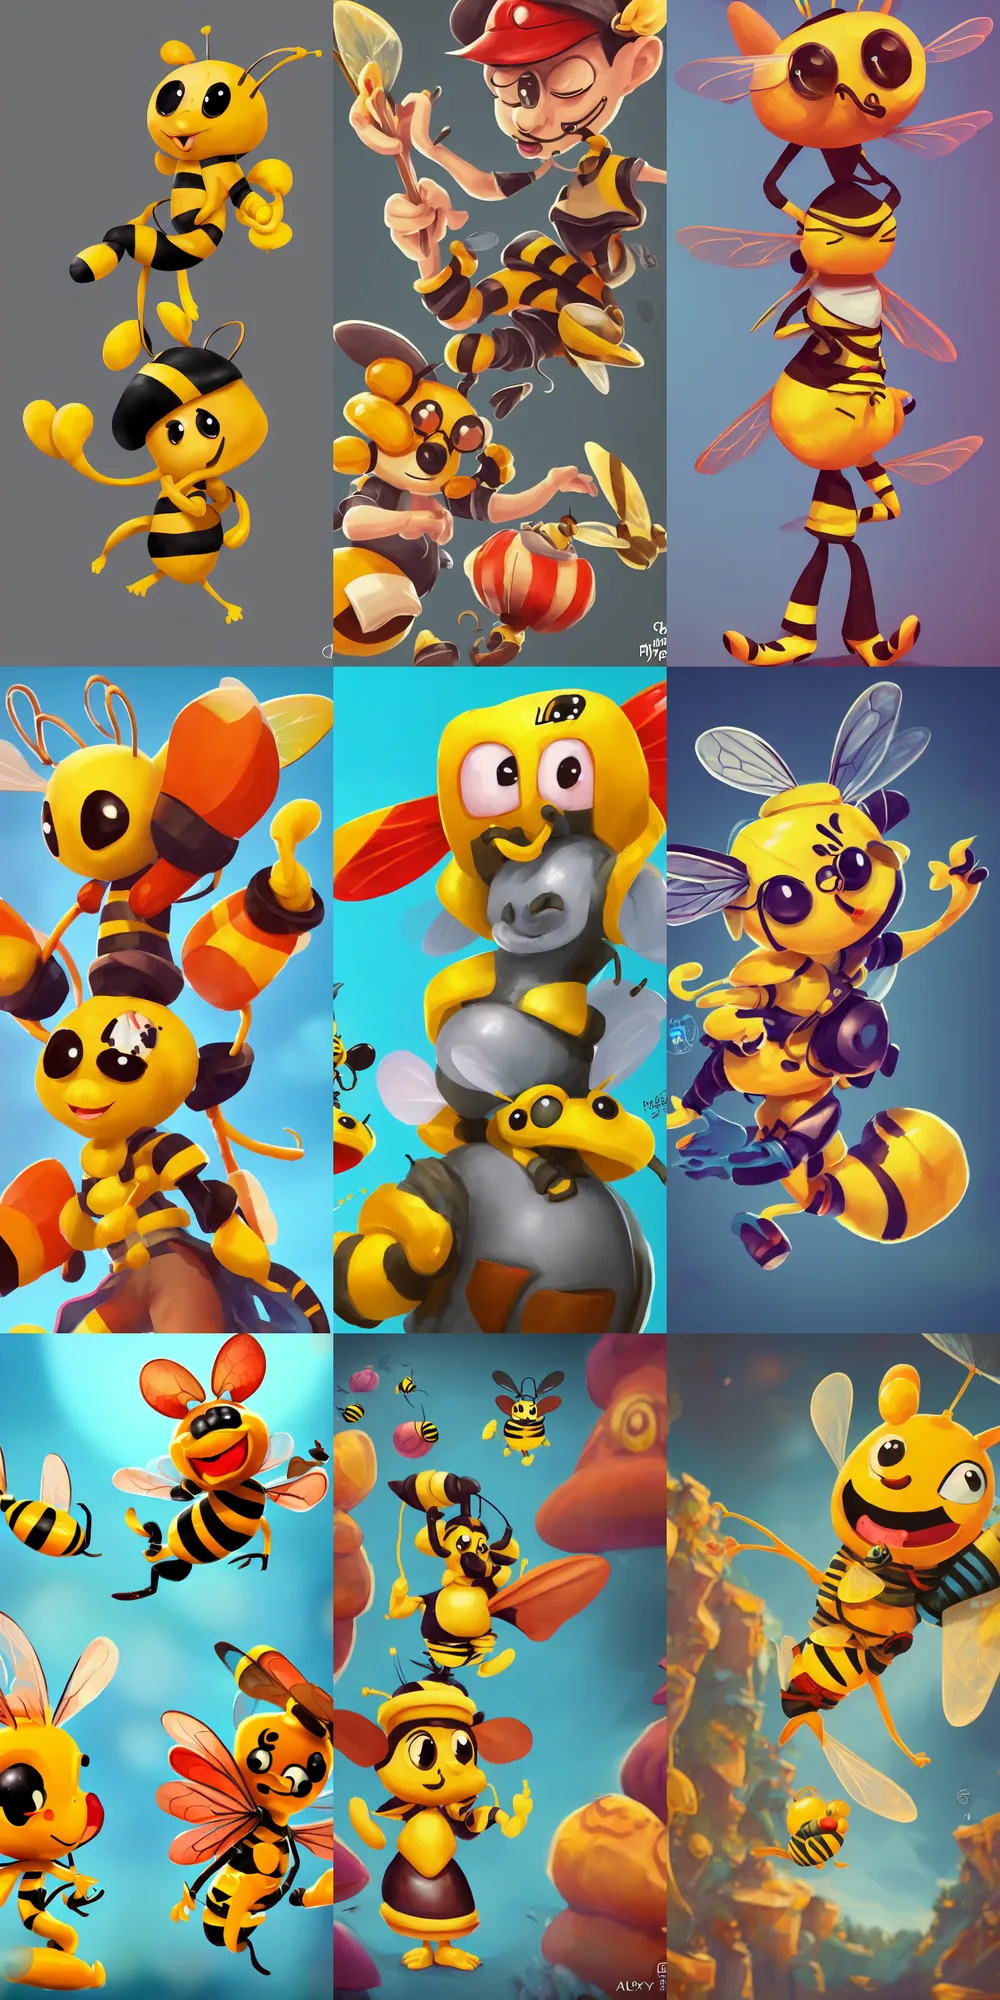 Prompt: a one character cartoon cute bee, polish hyper - casual, stylized, concept art, playrix style, ahmad merheb, edin durmisevic, alexander minze thumler, yan morala, maya bee, 8 k, game screen, close up, top artstation